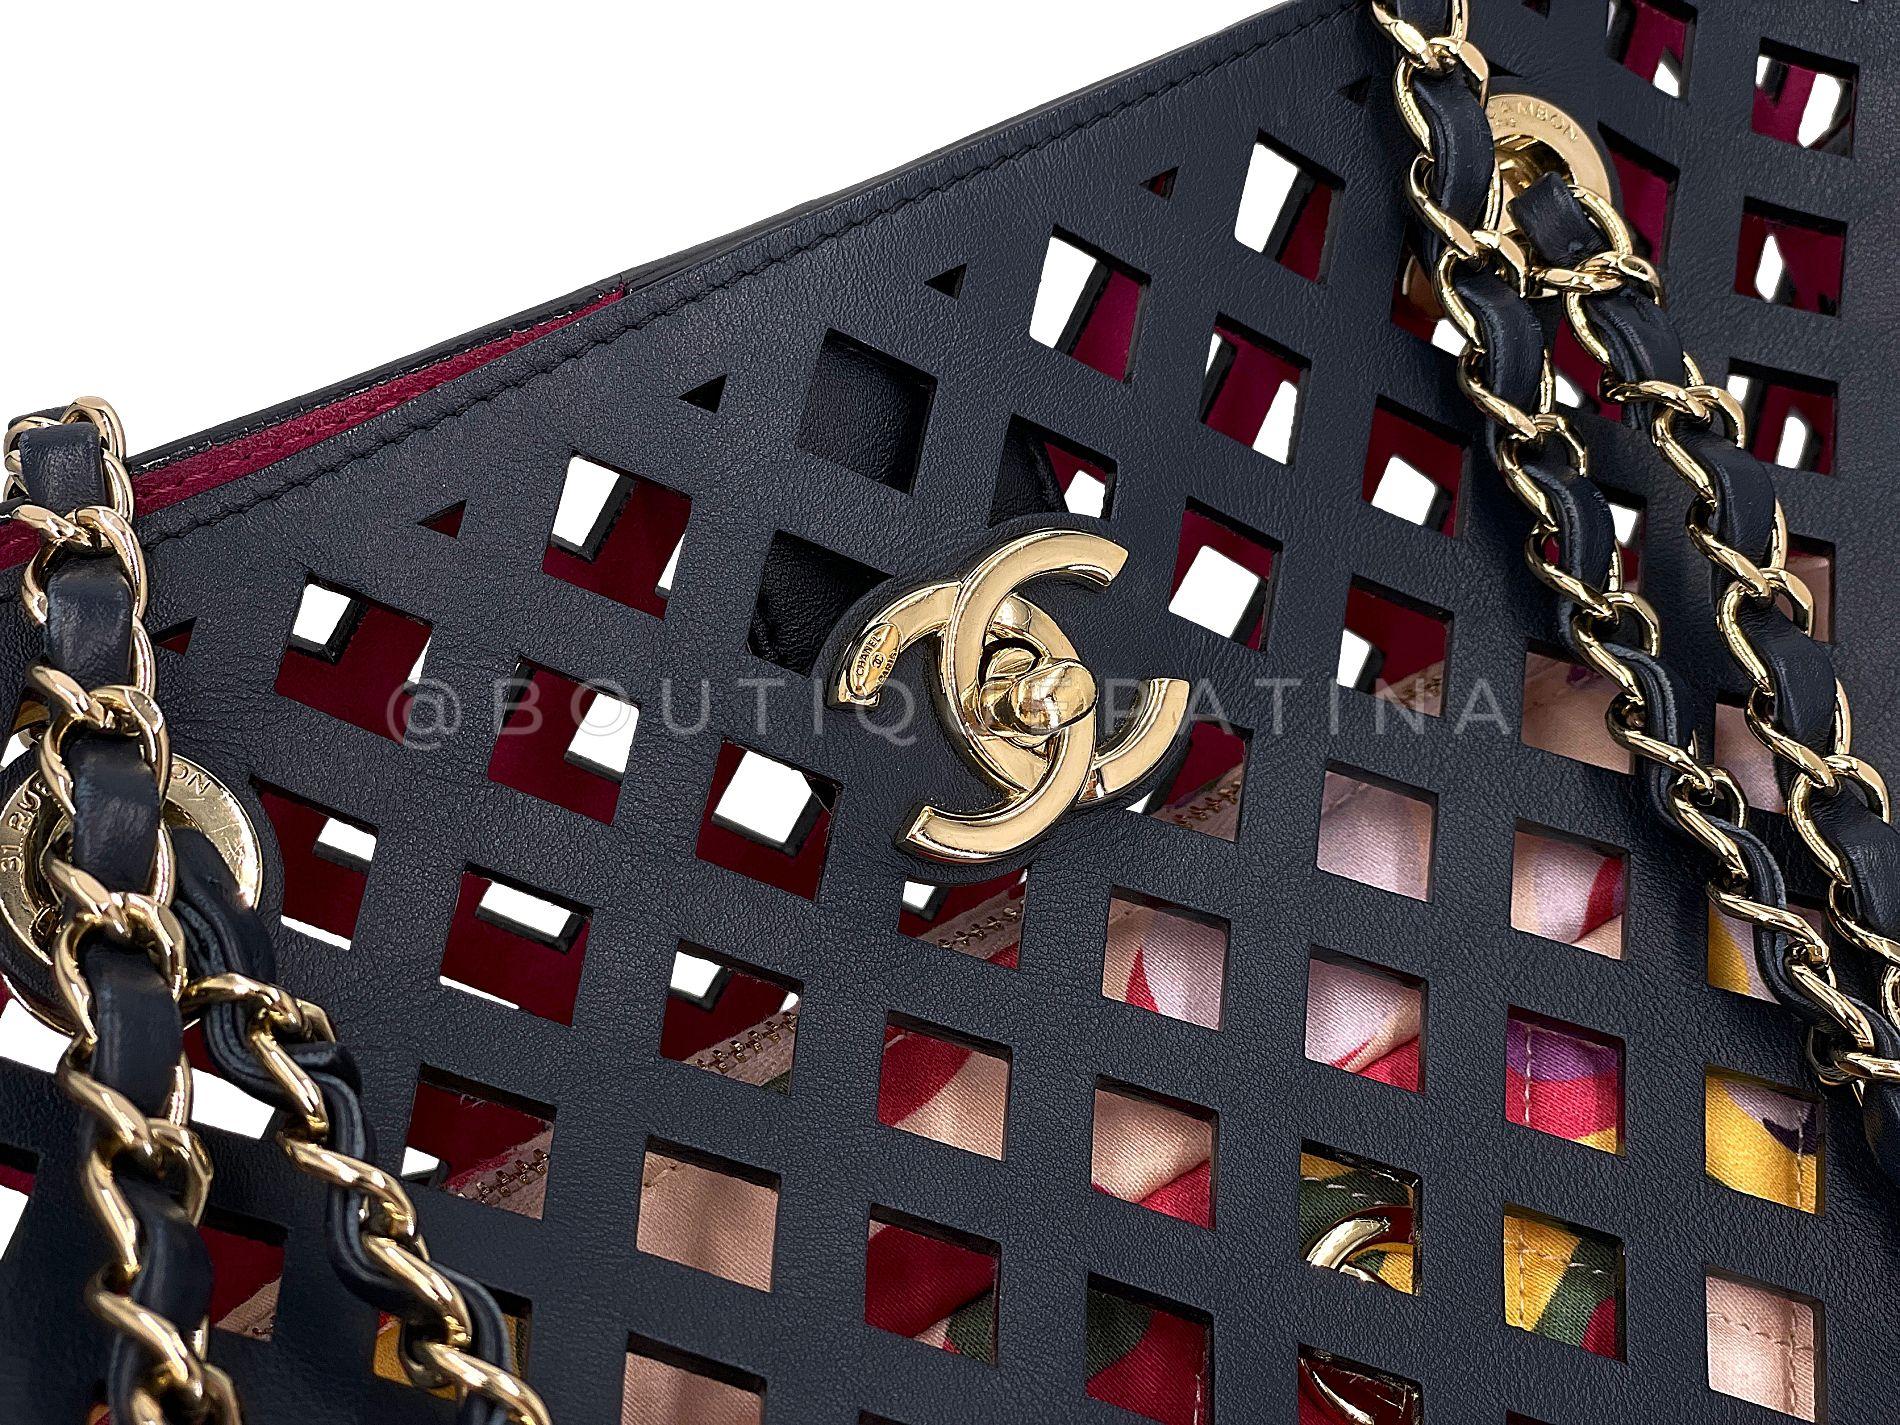 Chanel Black Fuchsia Pink Diamond Cutout Shopper Tote Bag 67861 en vente 6